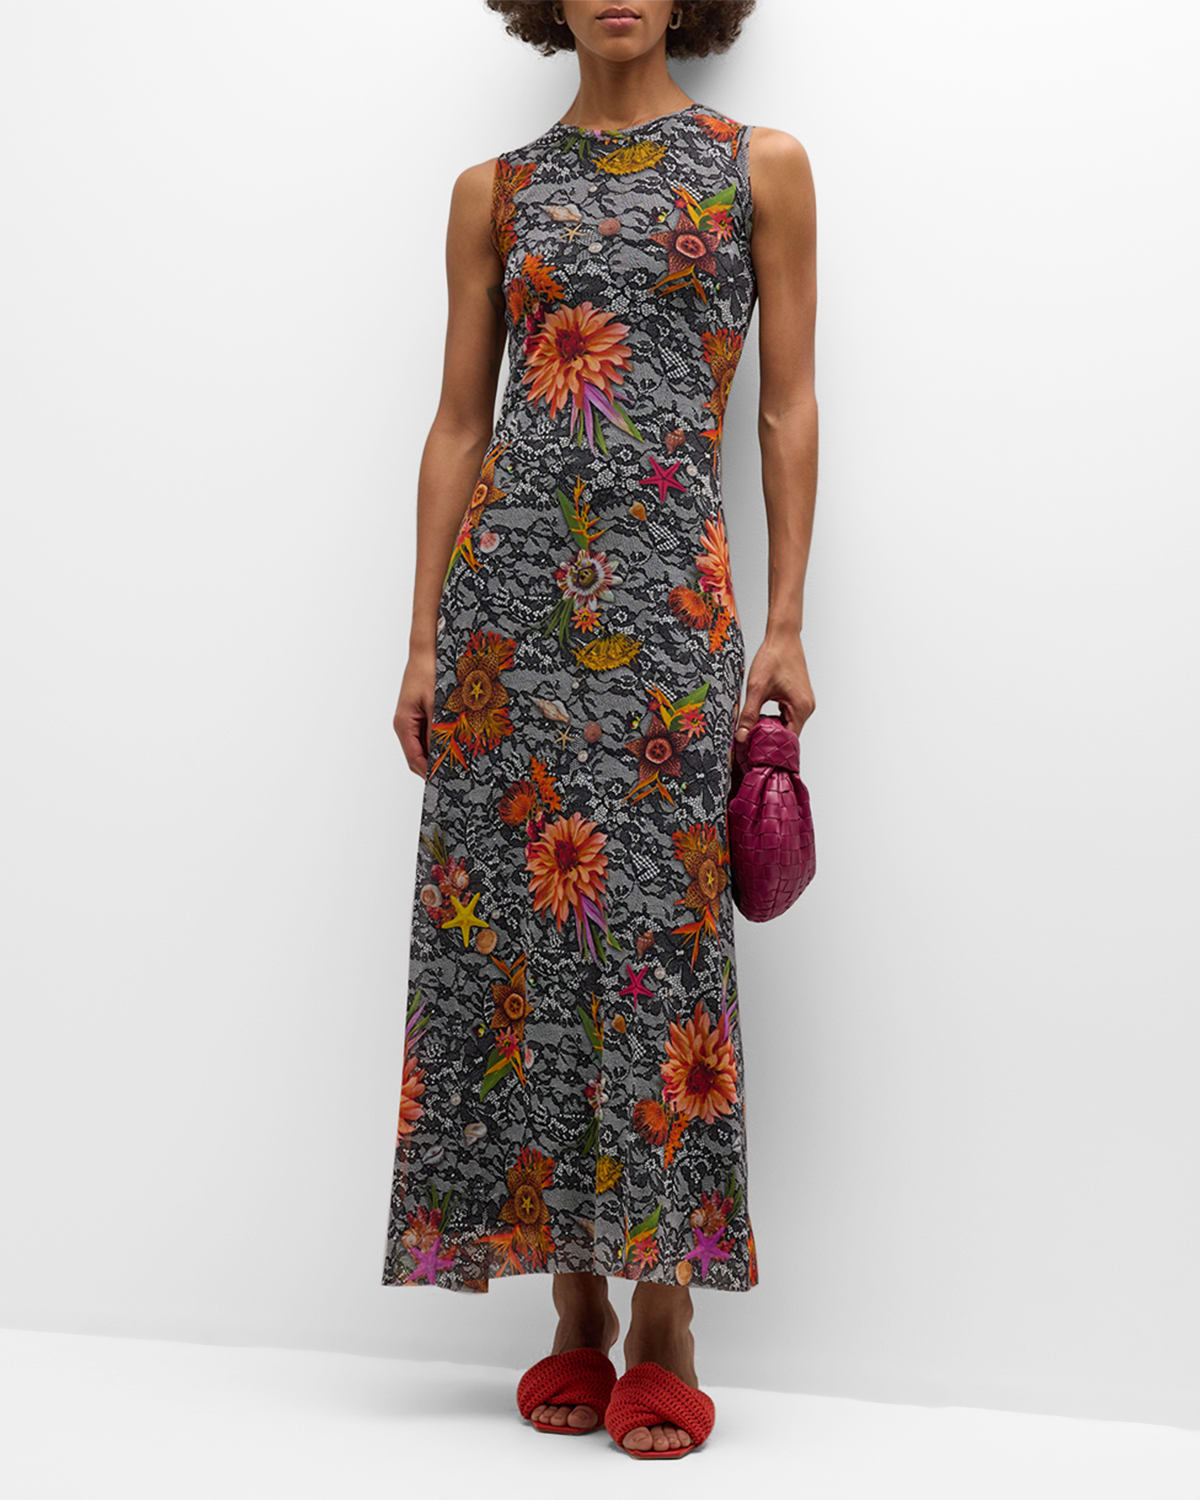 Sleeveless Floral Lace-Print Maxi Dress